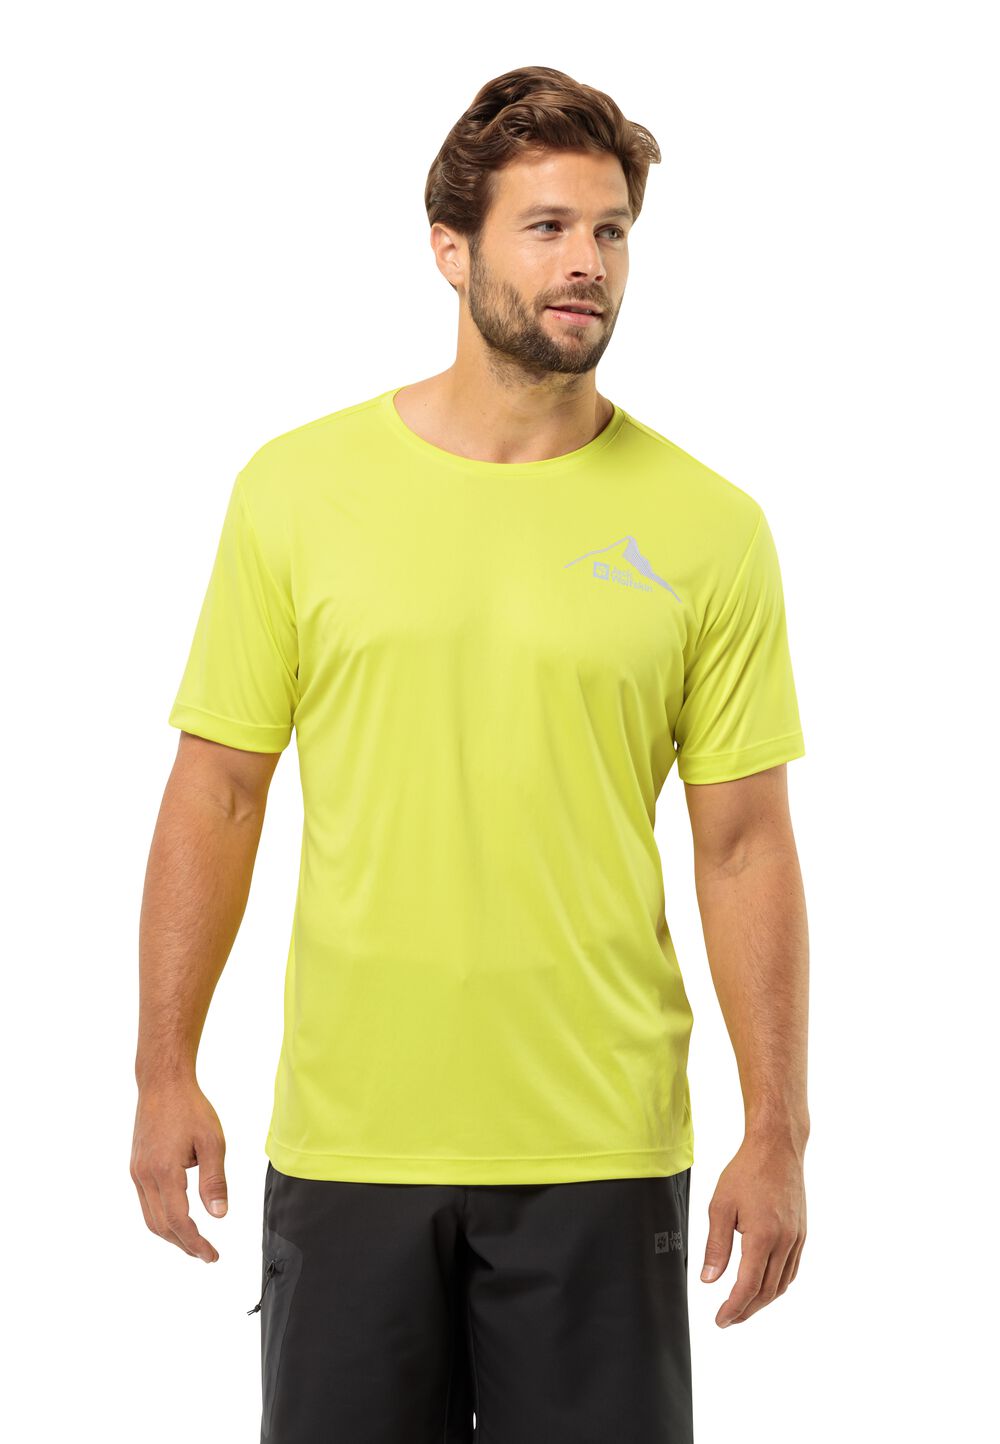 Jack Wolfskin Peak Graphic T-Shirt Men Functioneel shirt Heren 3XL oranje firefly